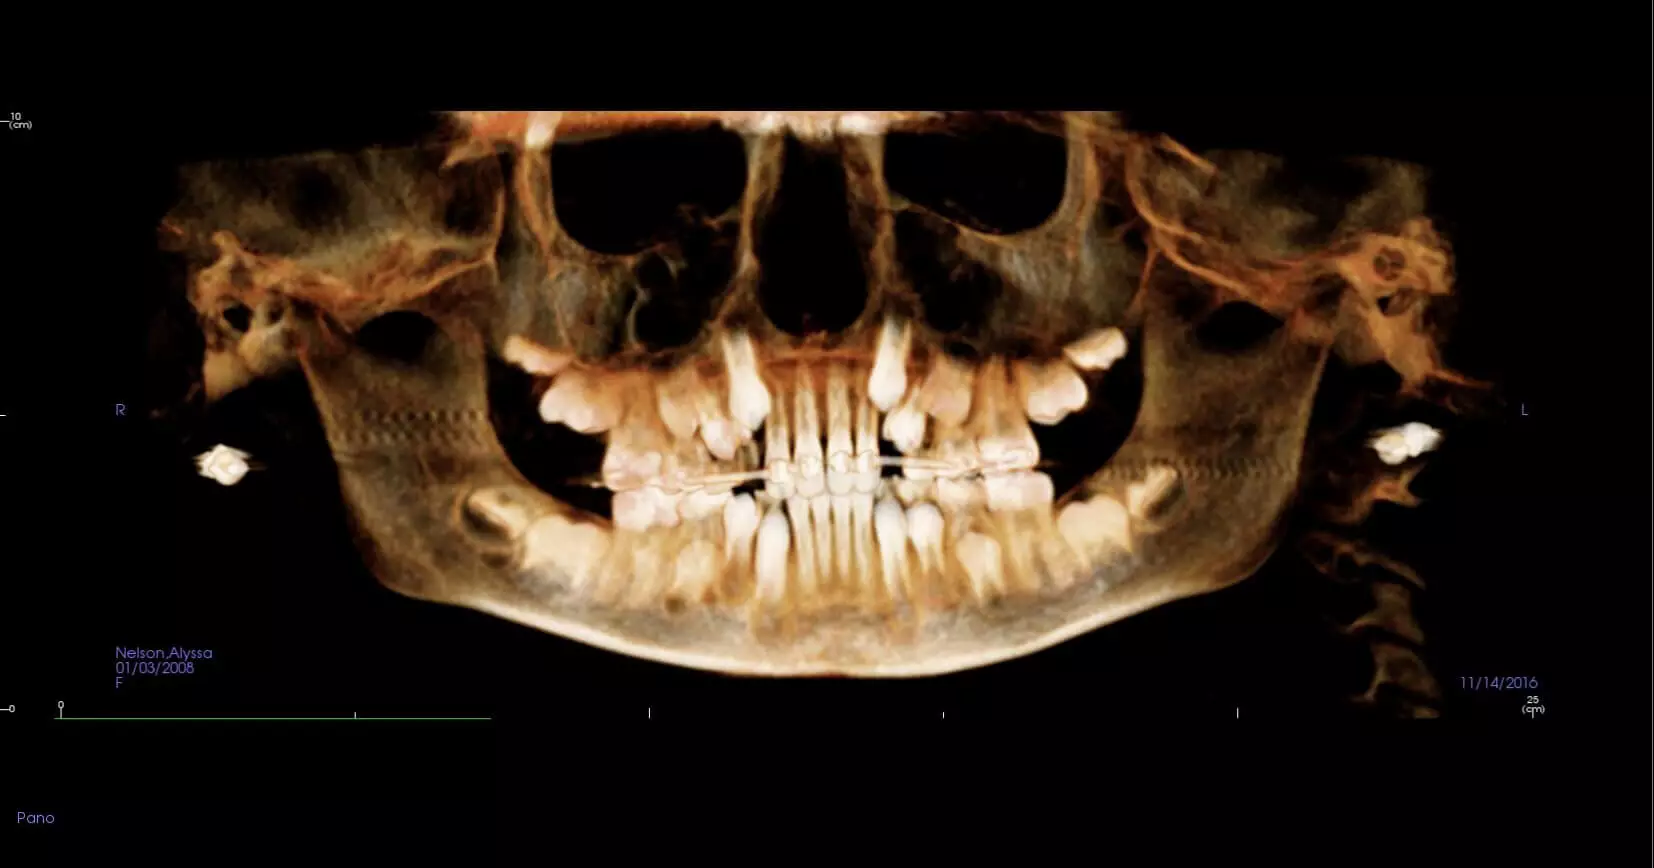 x-ray of teeth before pan